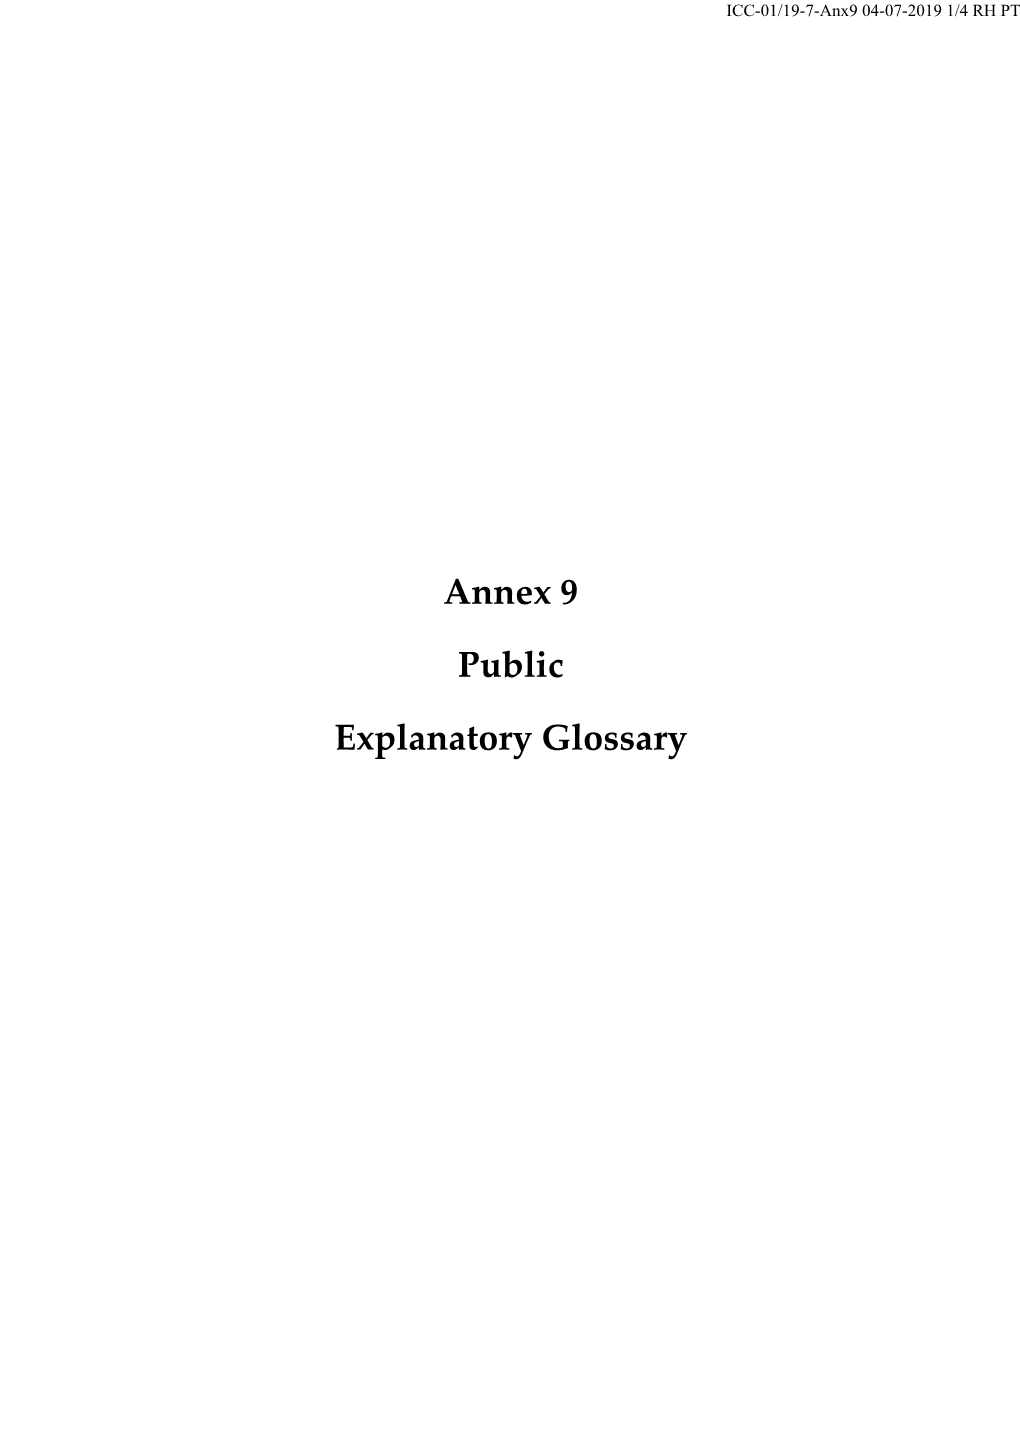 Annex 9 Public Explanatory Glossary